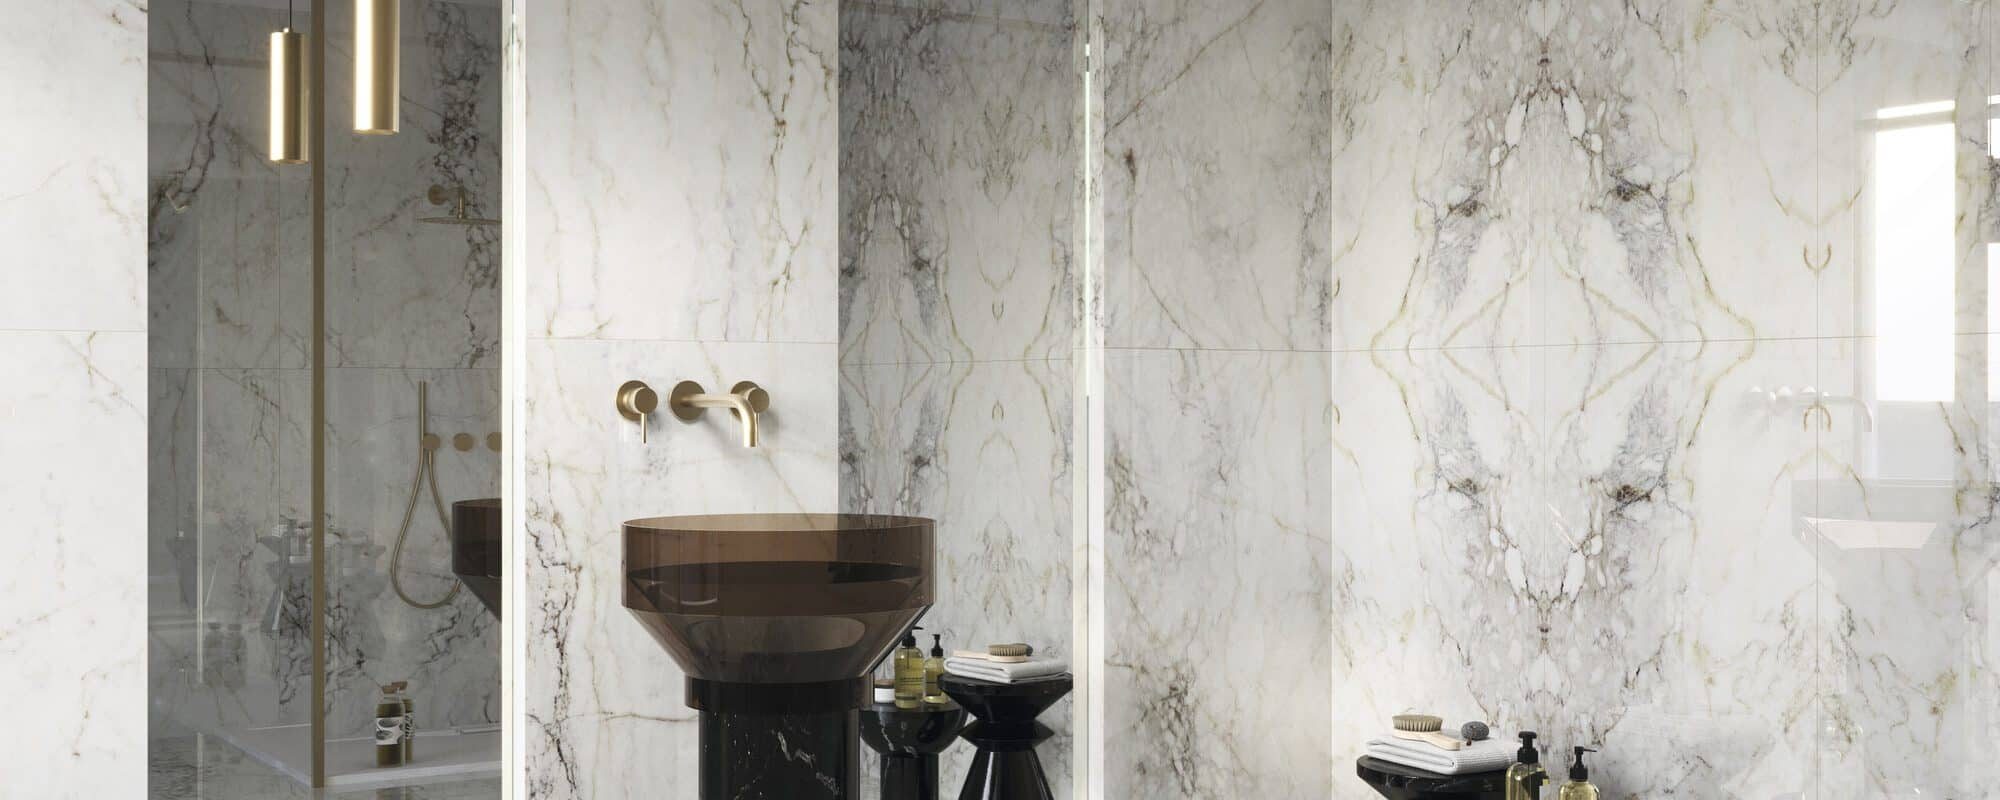 oxyd-marble effect bathroom tiles uk slider 1